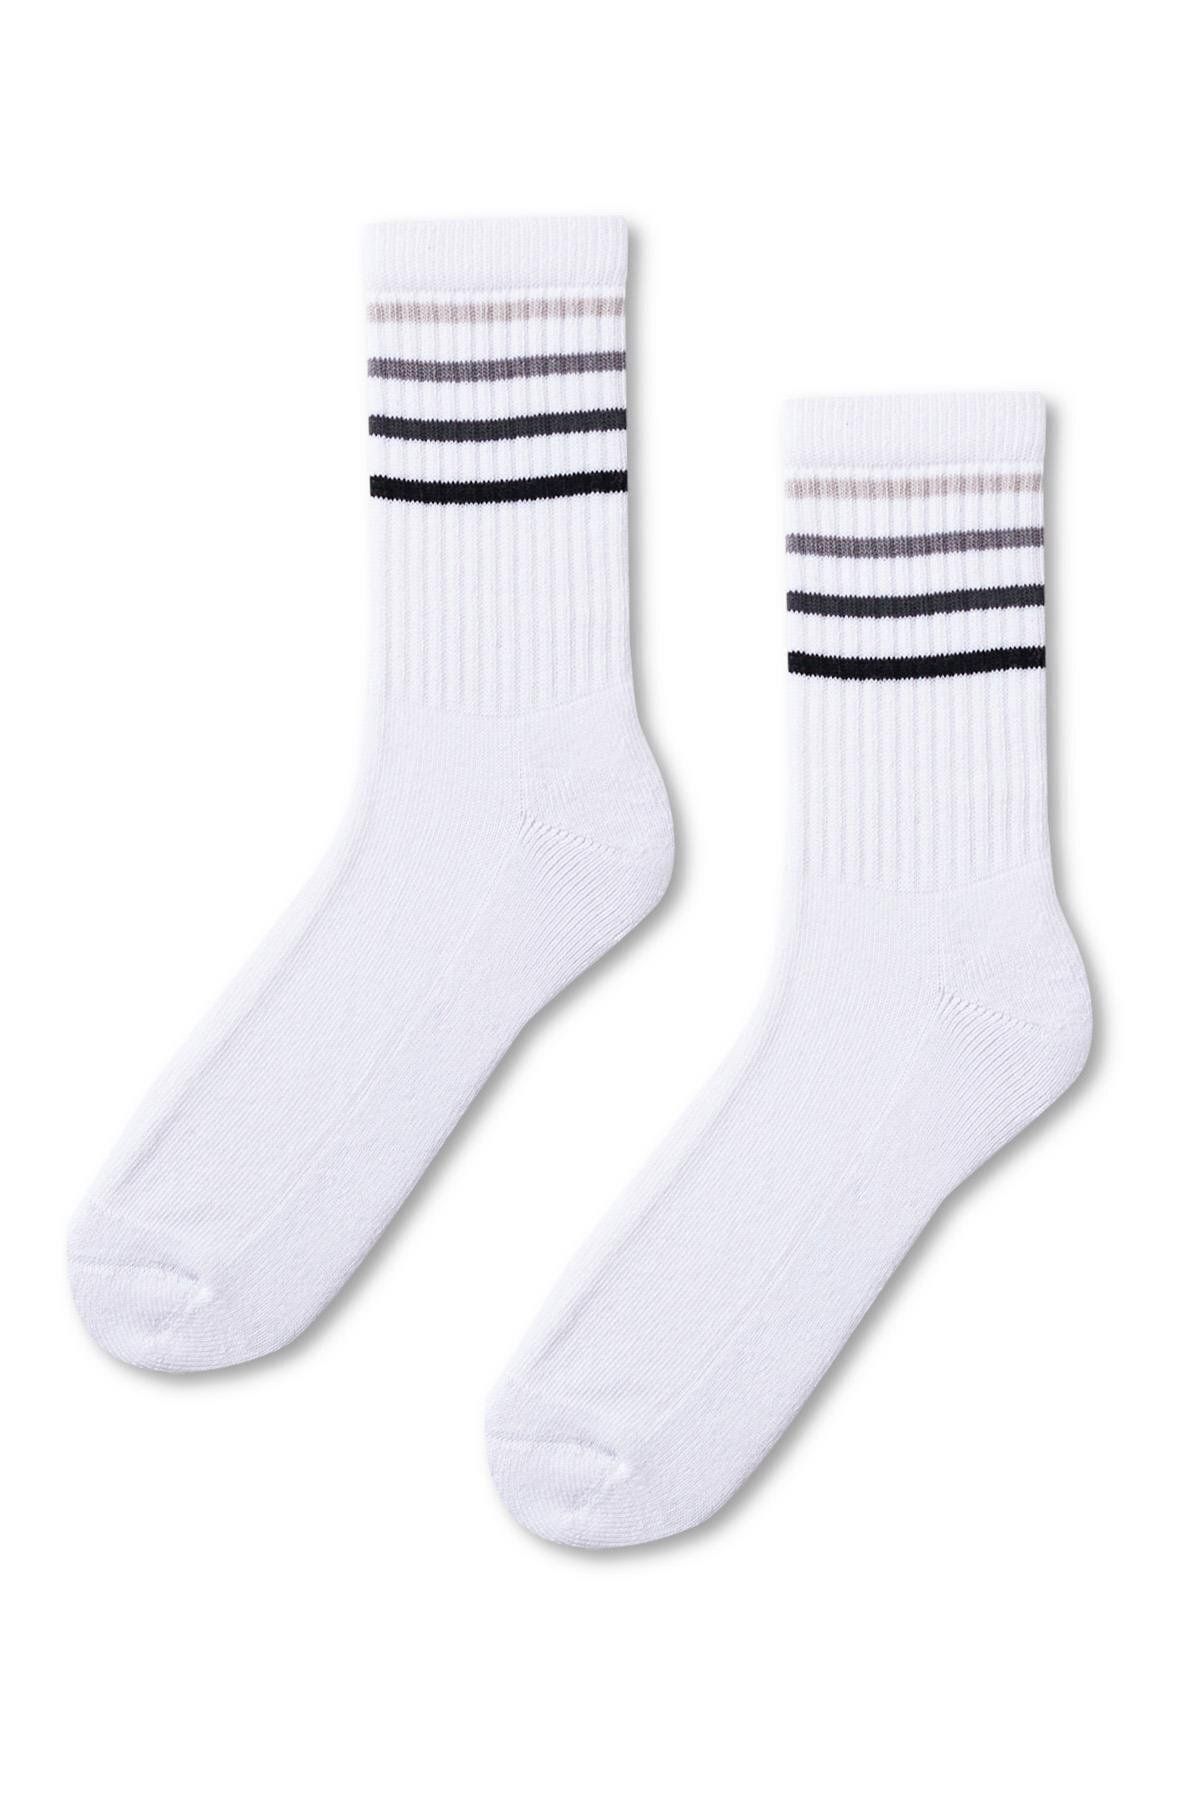 Katia & Bony Renkli Çizgili Havlu Taban Çorap Beyaz/gri